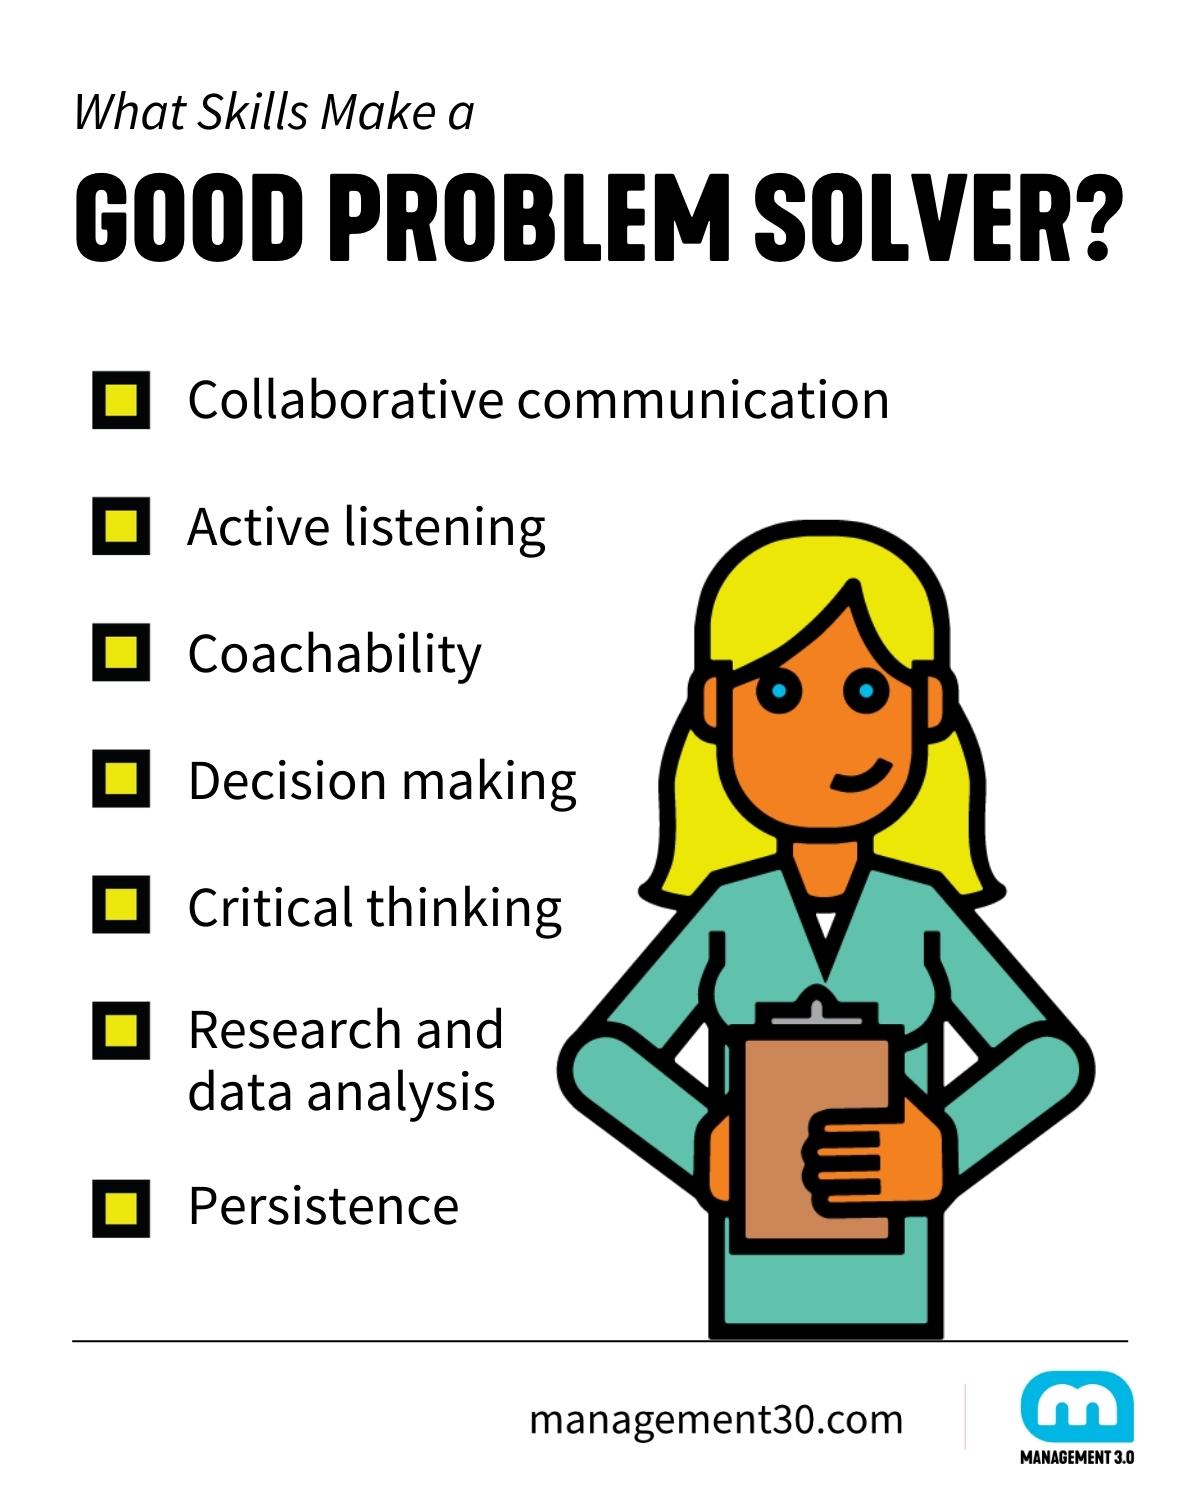 Skills of good problem-solvers